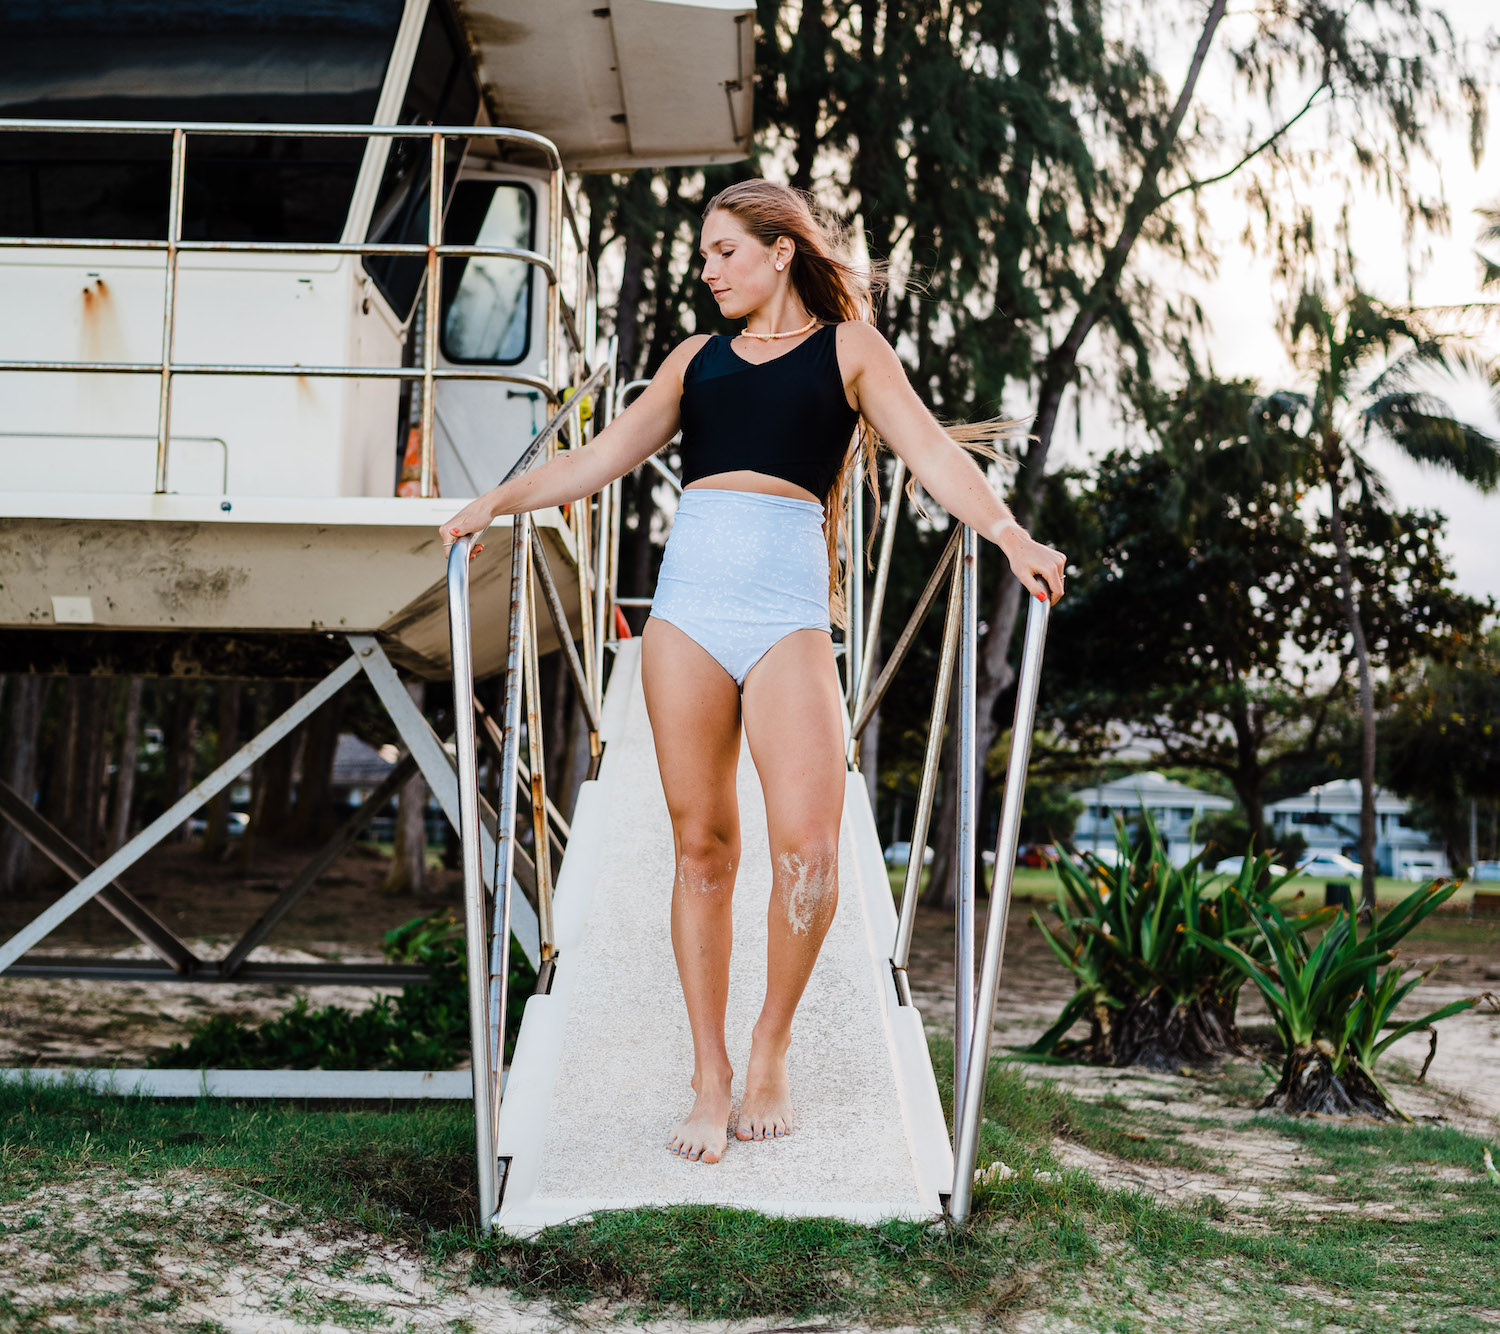 The Most Flattering Bikini Poses for Instagram | by Shanté Renee Roline |  Medium